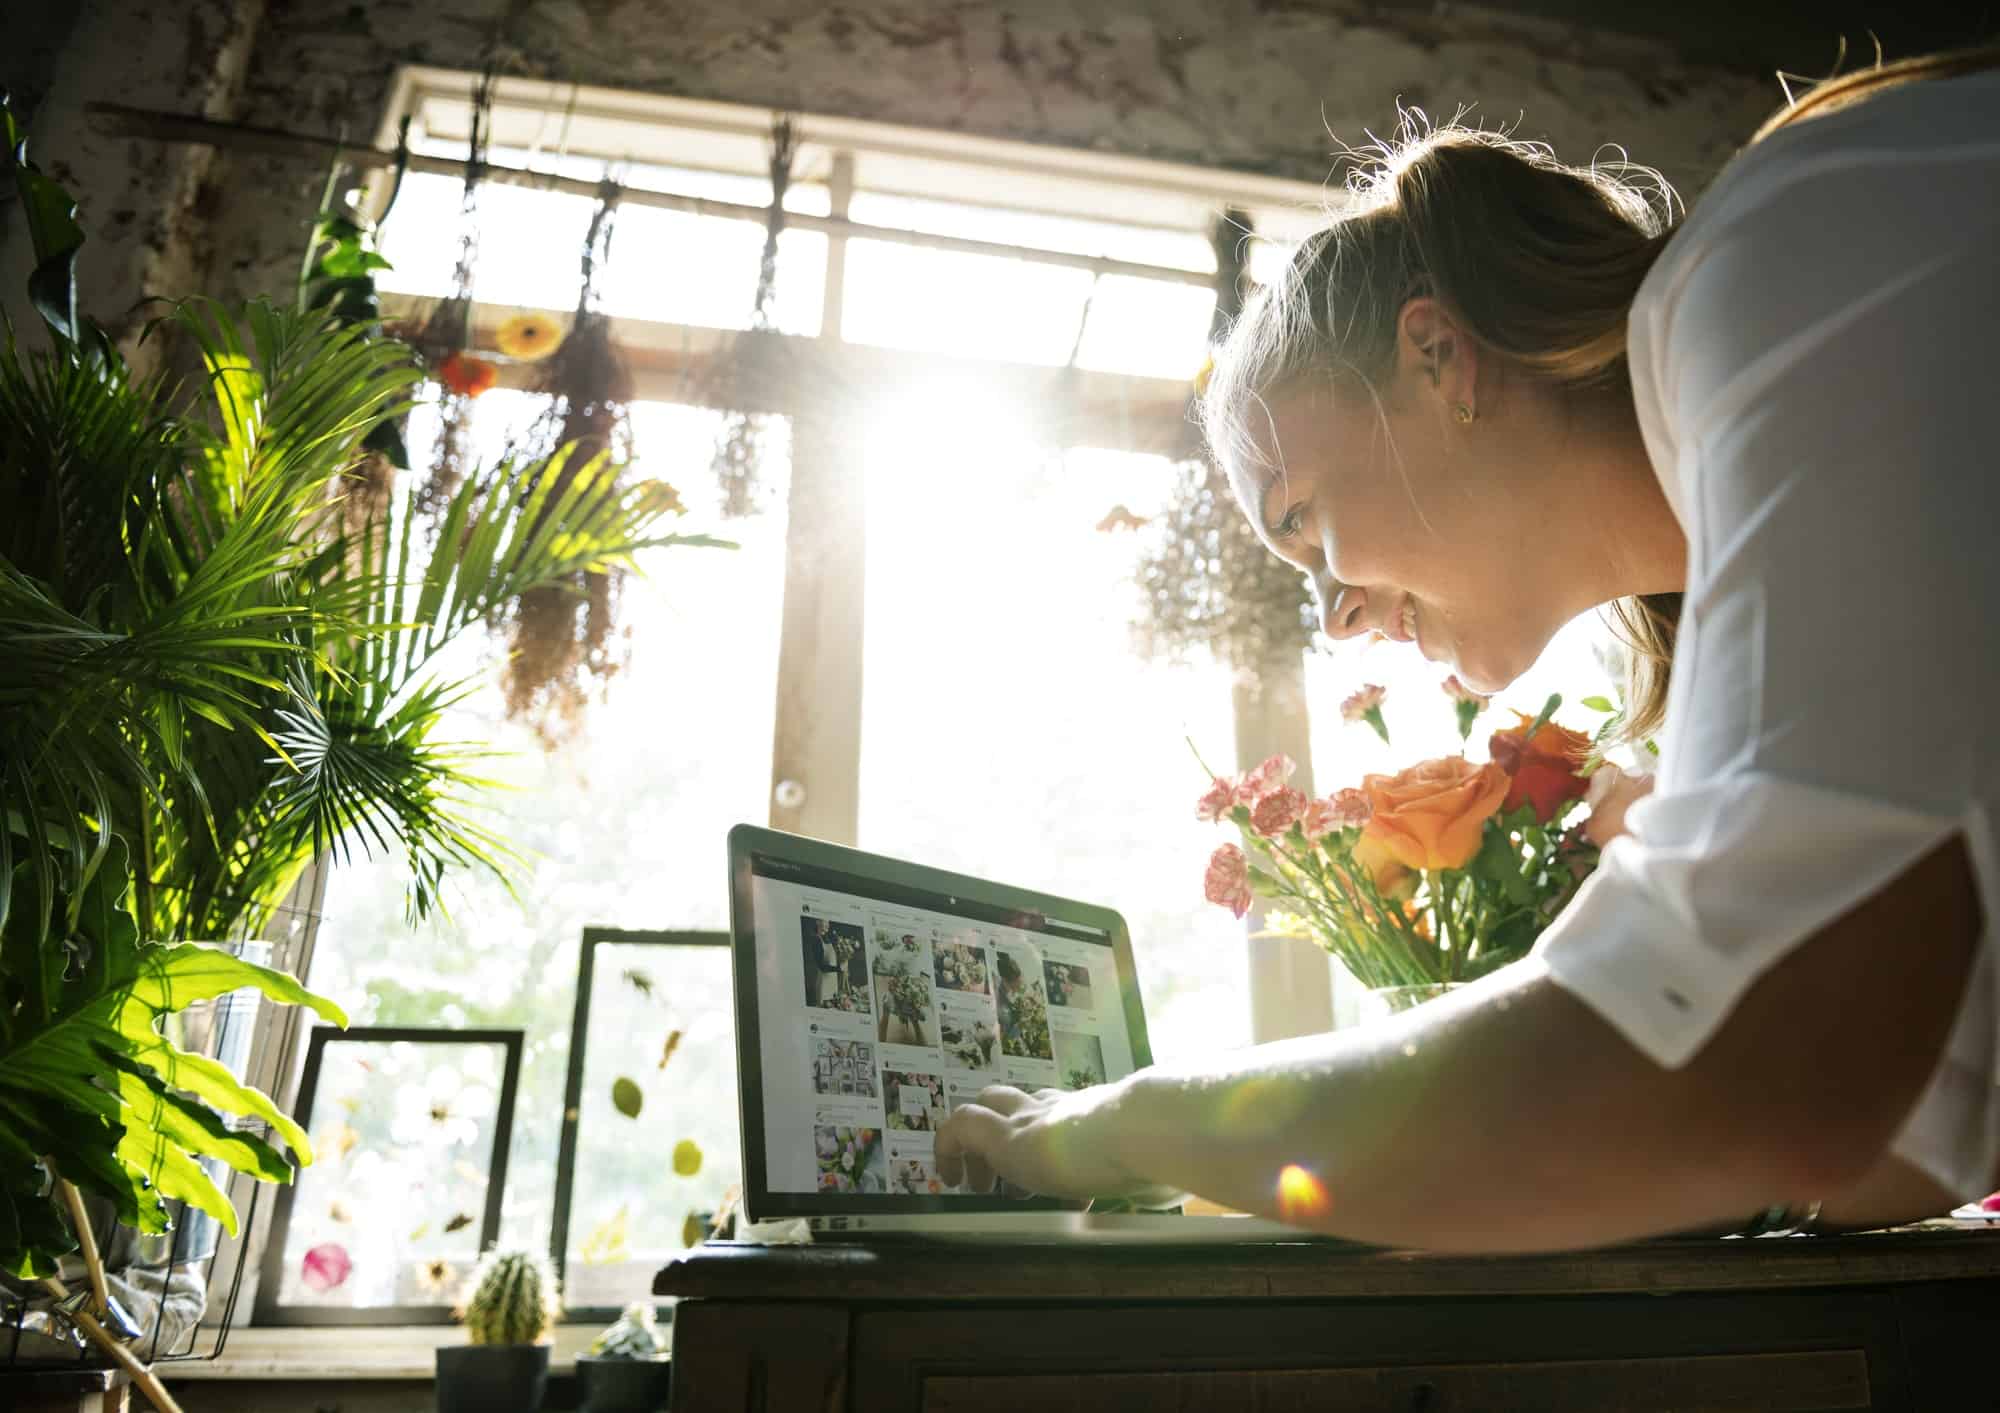 E-business flower shop marketing promote on social media